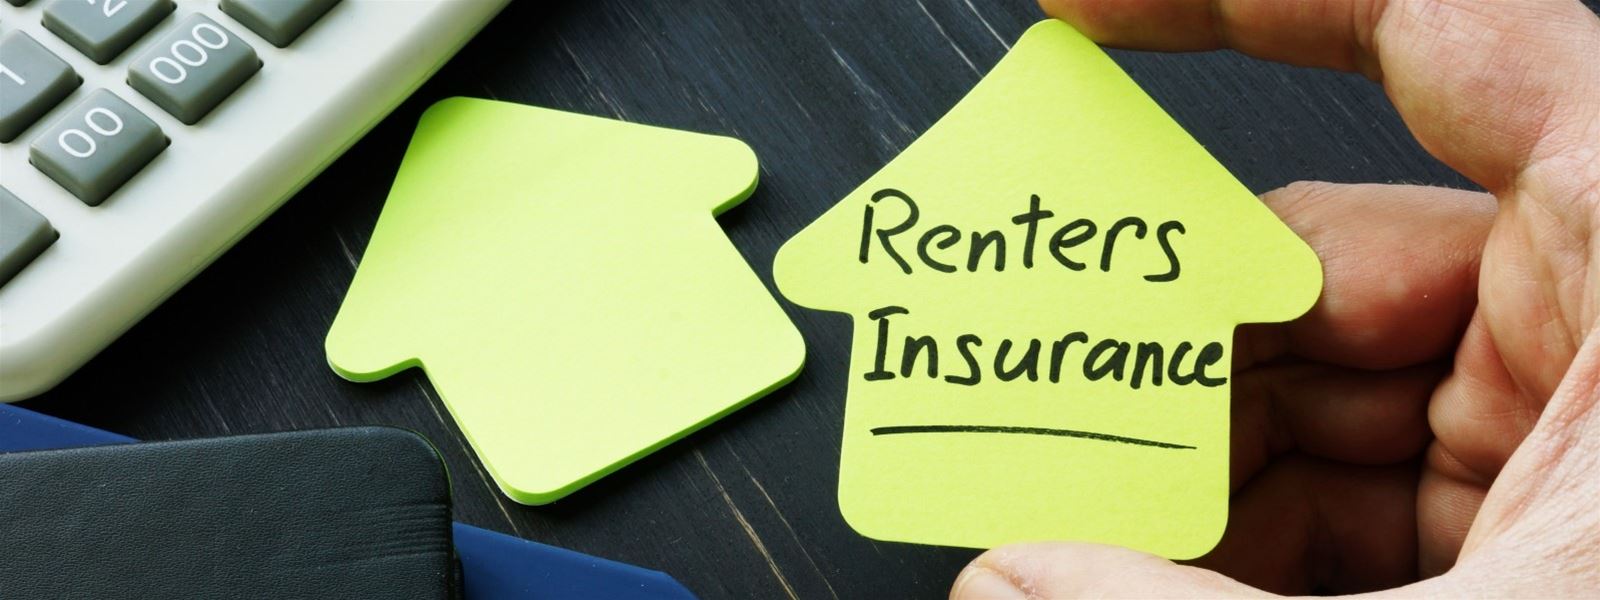 Do You Need Renter's Insurance?